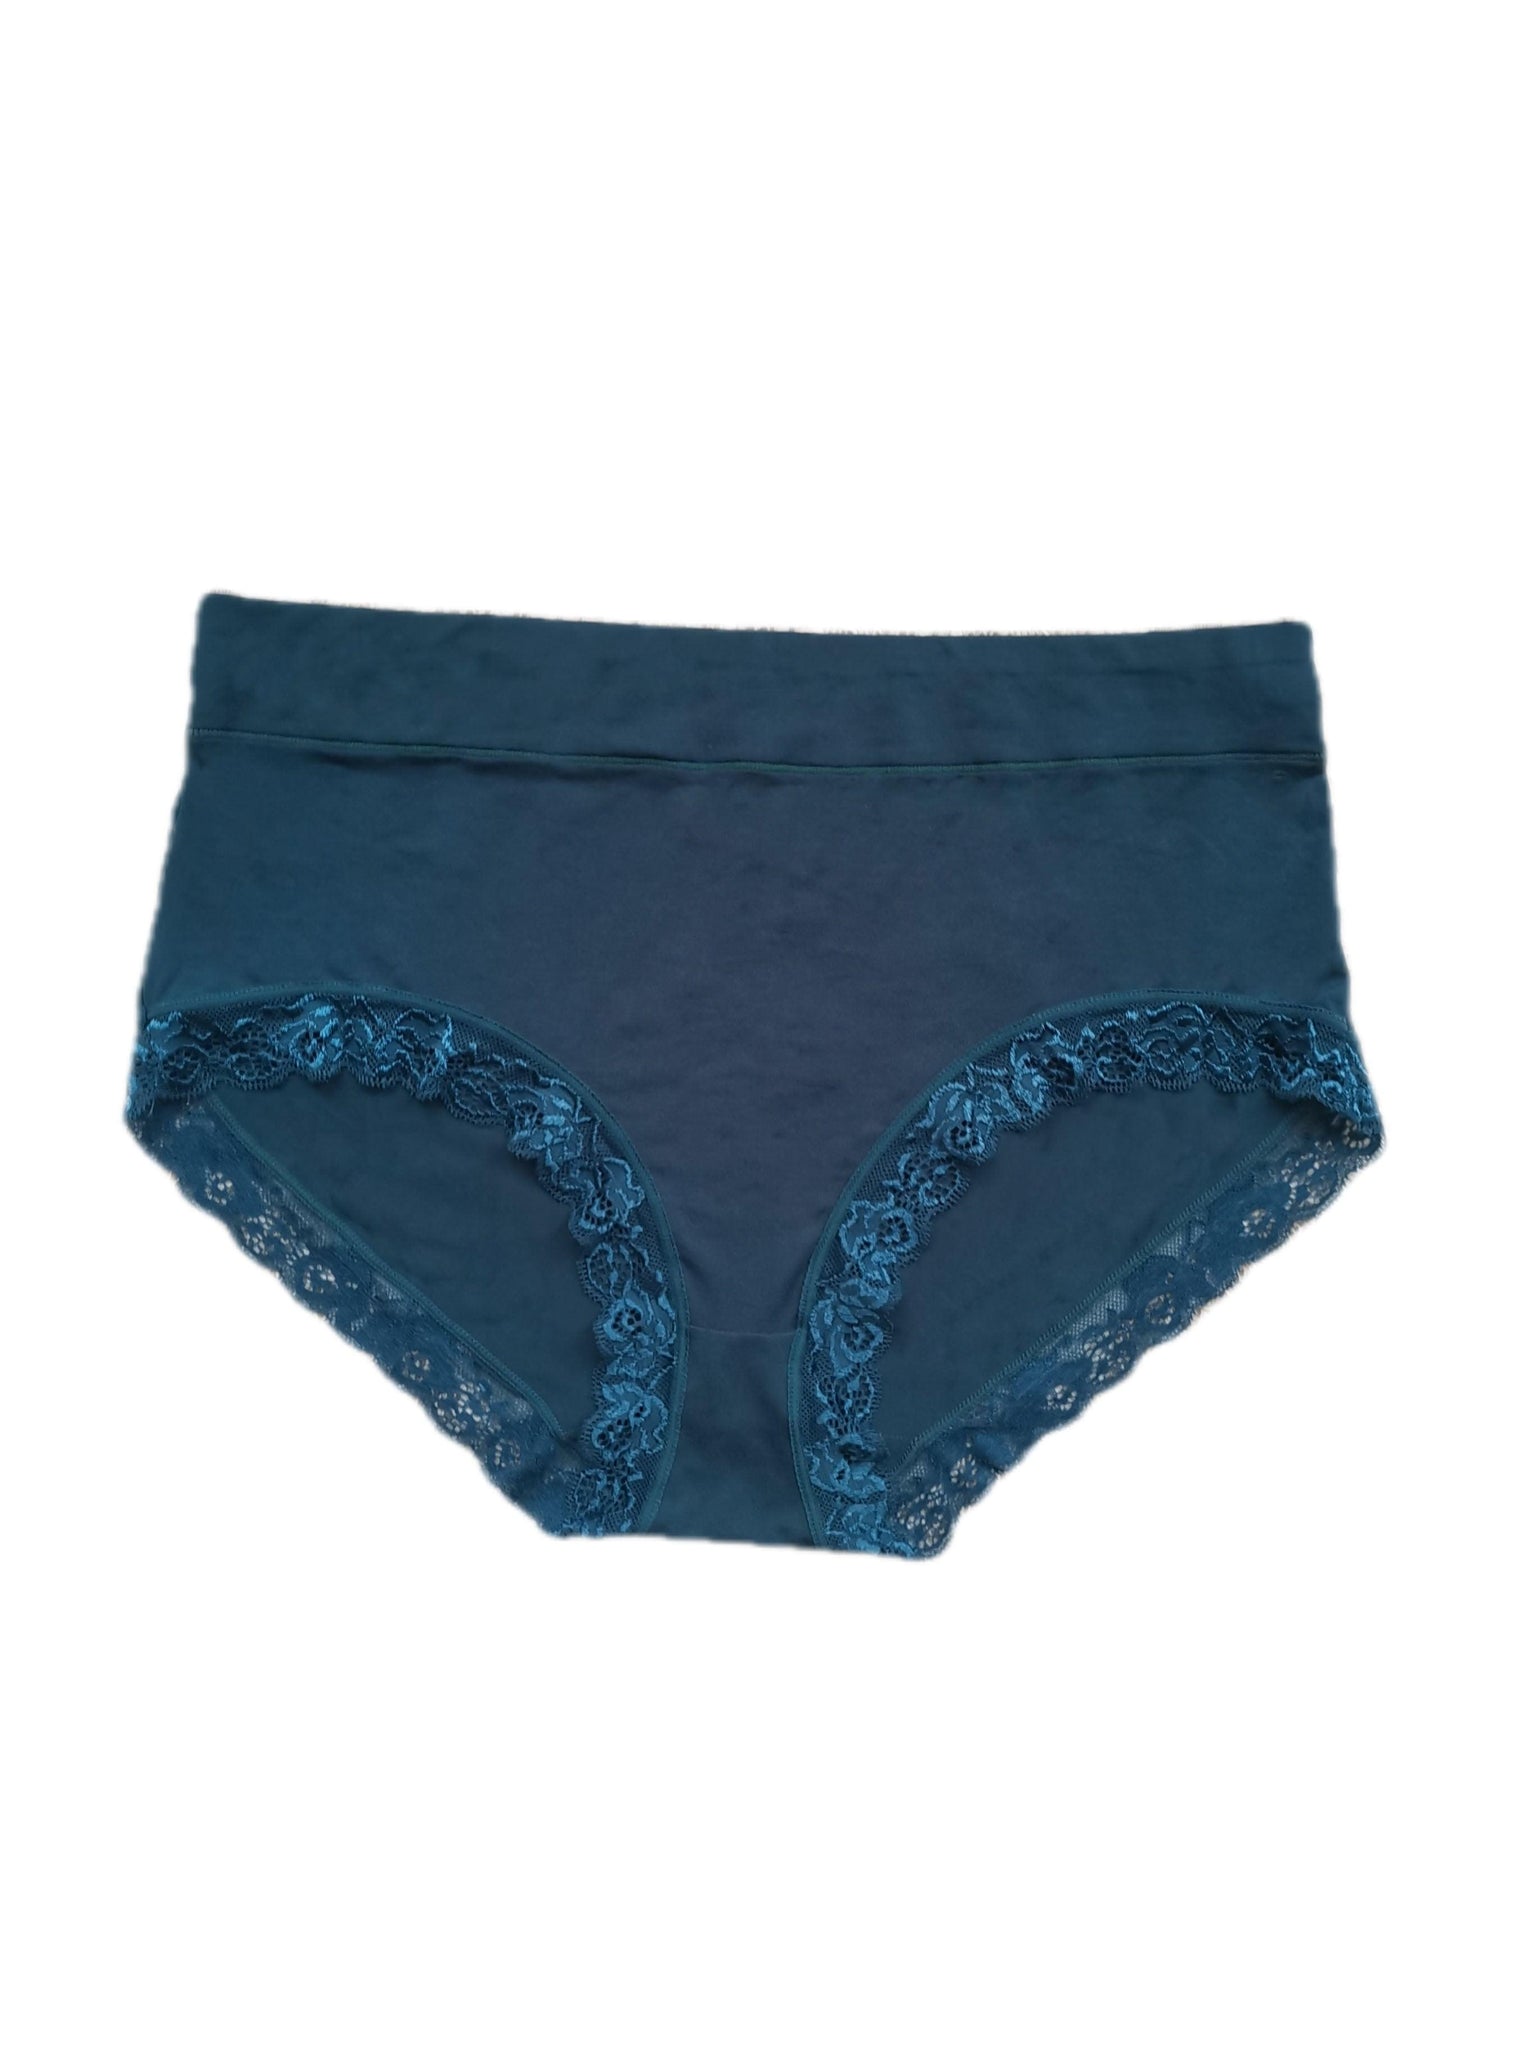 Bamboo Fibre Women Underwear Panties - The Trendy